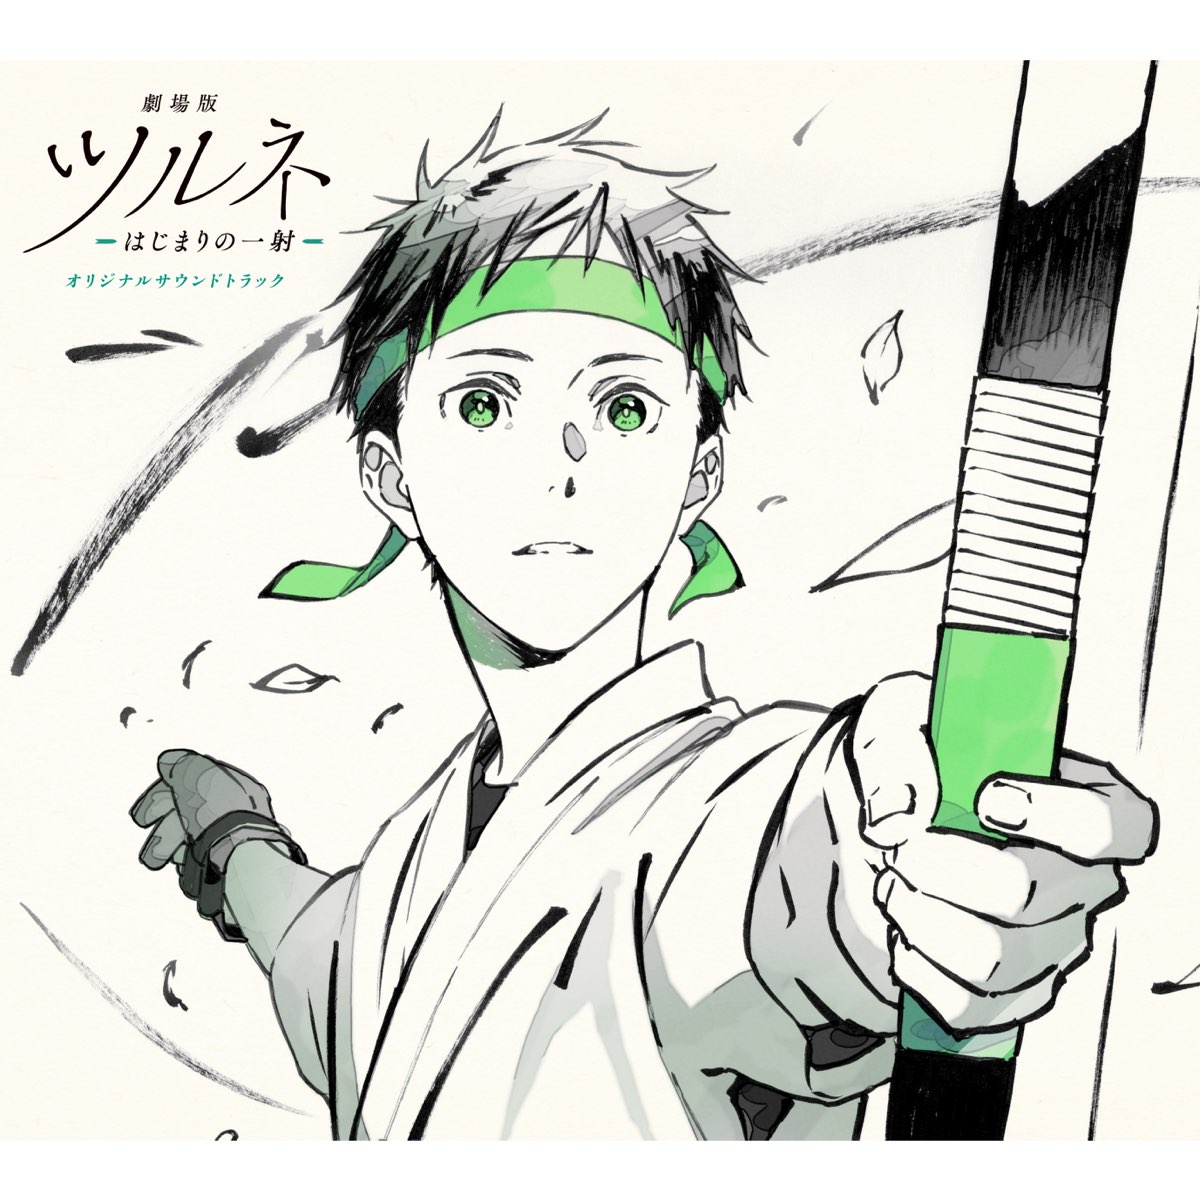 Tsurune The Movie: The First Shot Original Soundtrack - Album by Masaru  Yokoyama - Apple Music